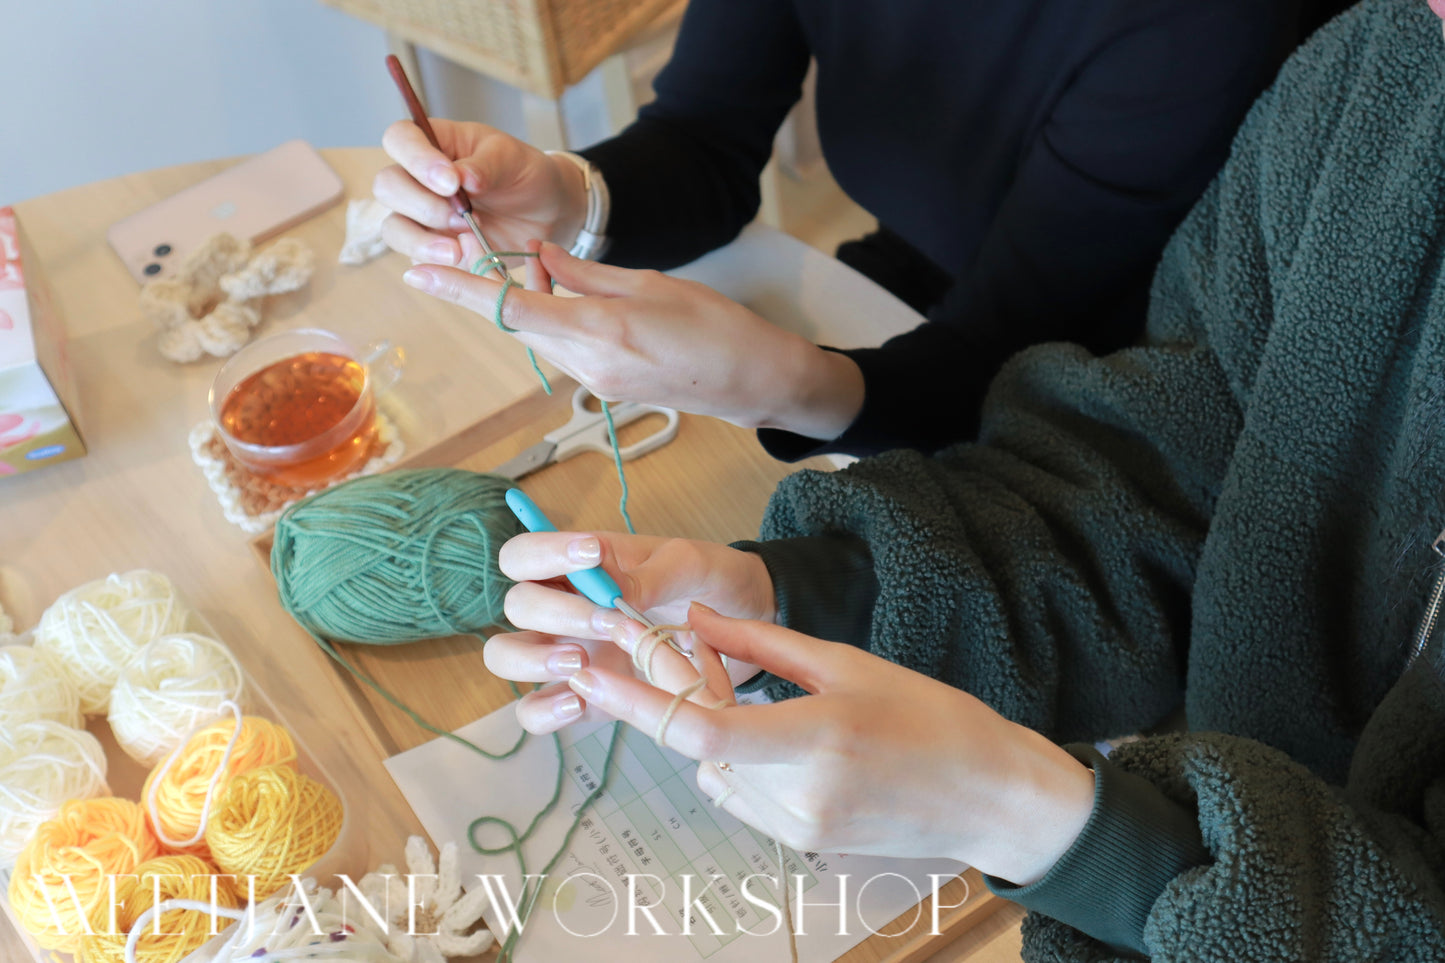 Crochet Workshop| Learn to crochet DAISY 【2 sessions】